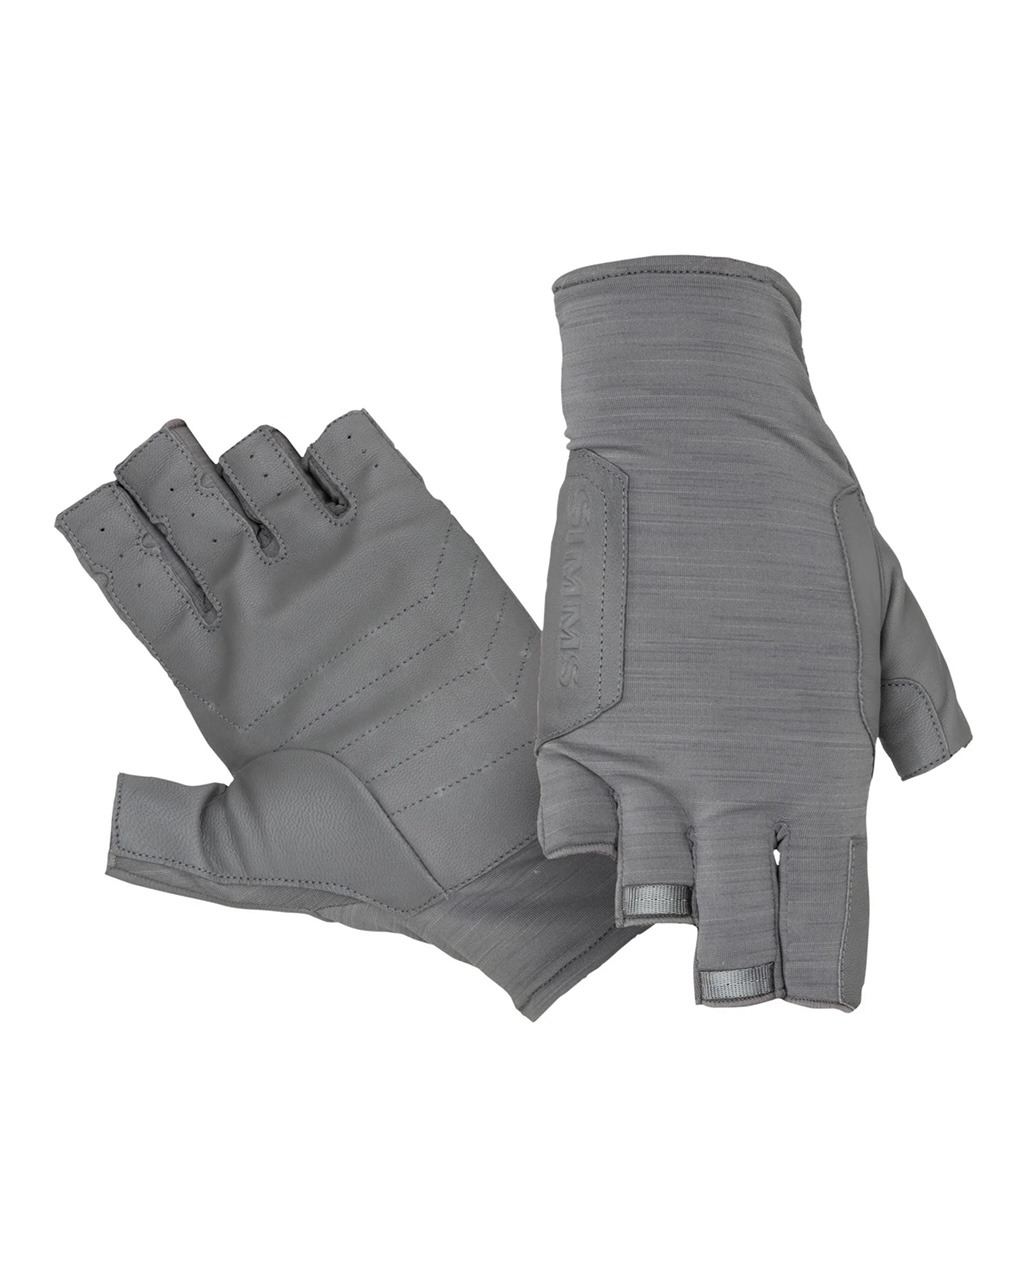 Simms Solarflex Guide Glove - Sterling - XXL